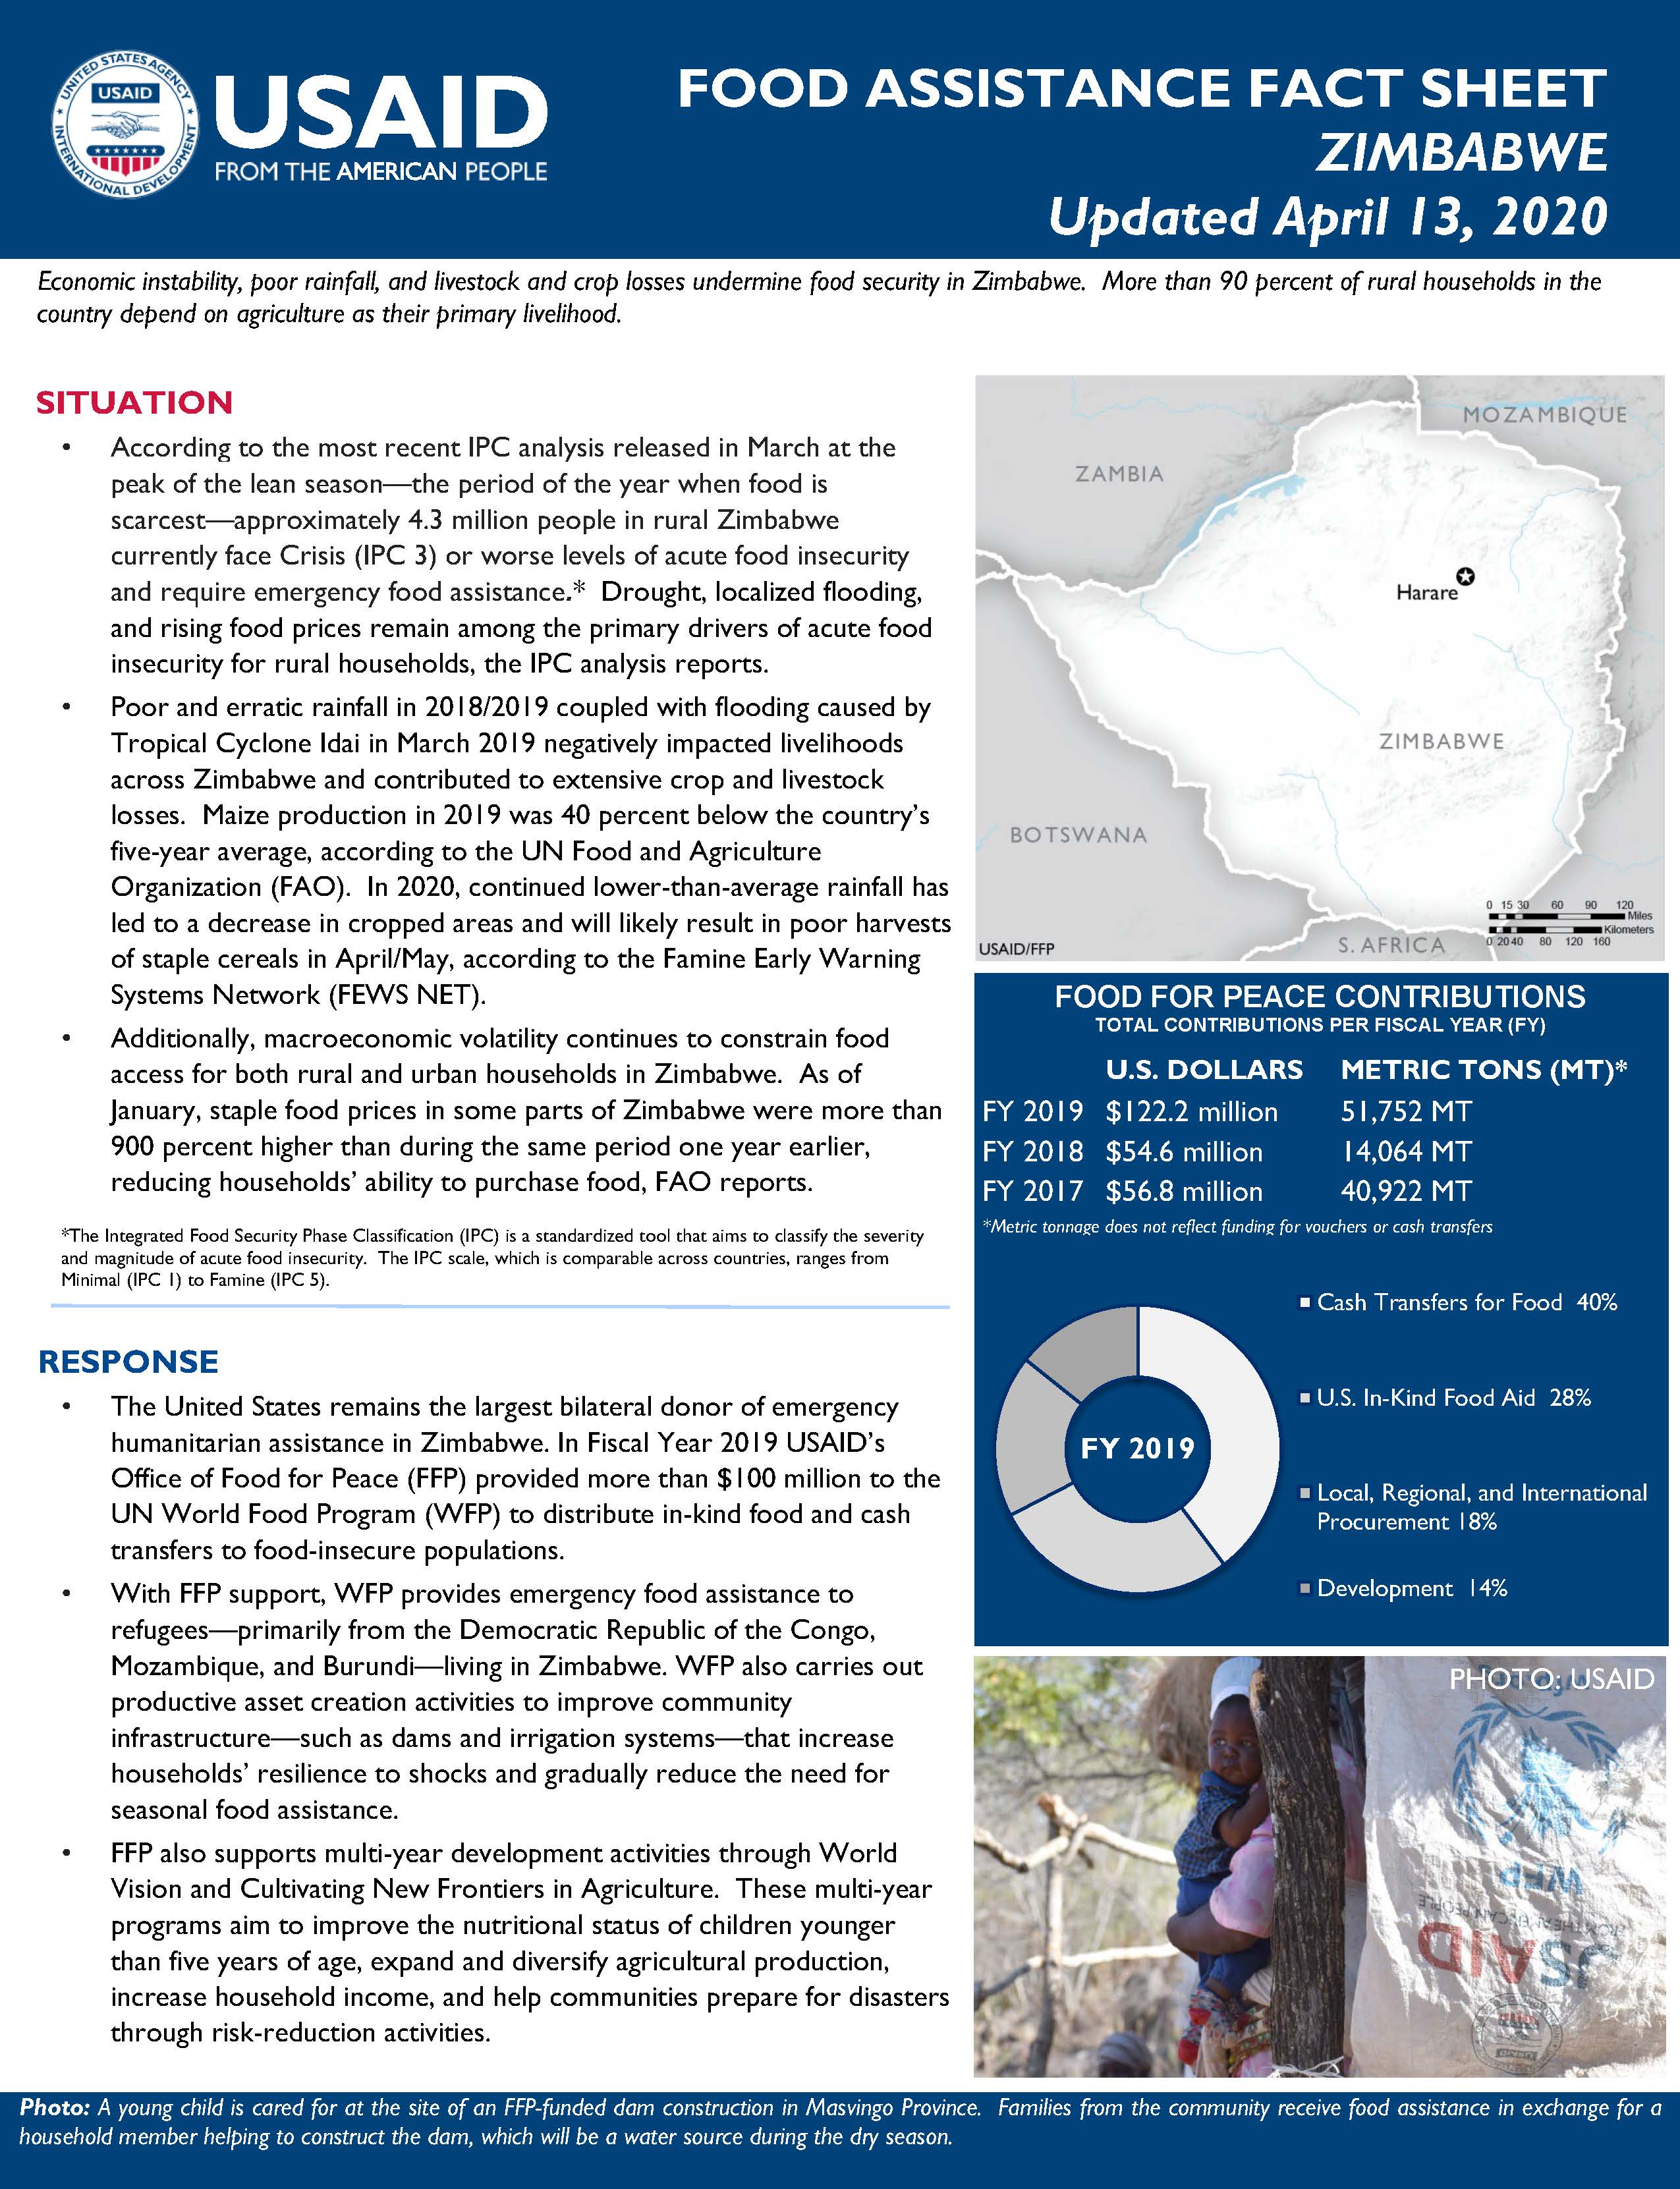 Food Assistance Fact Sheet - Zimbabwe